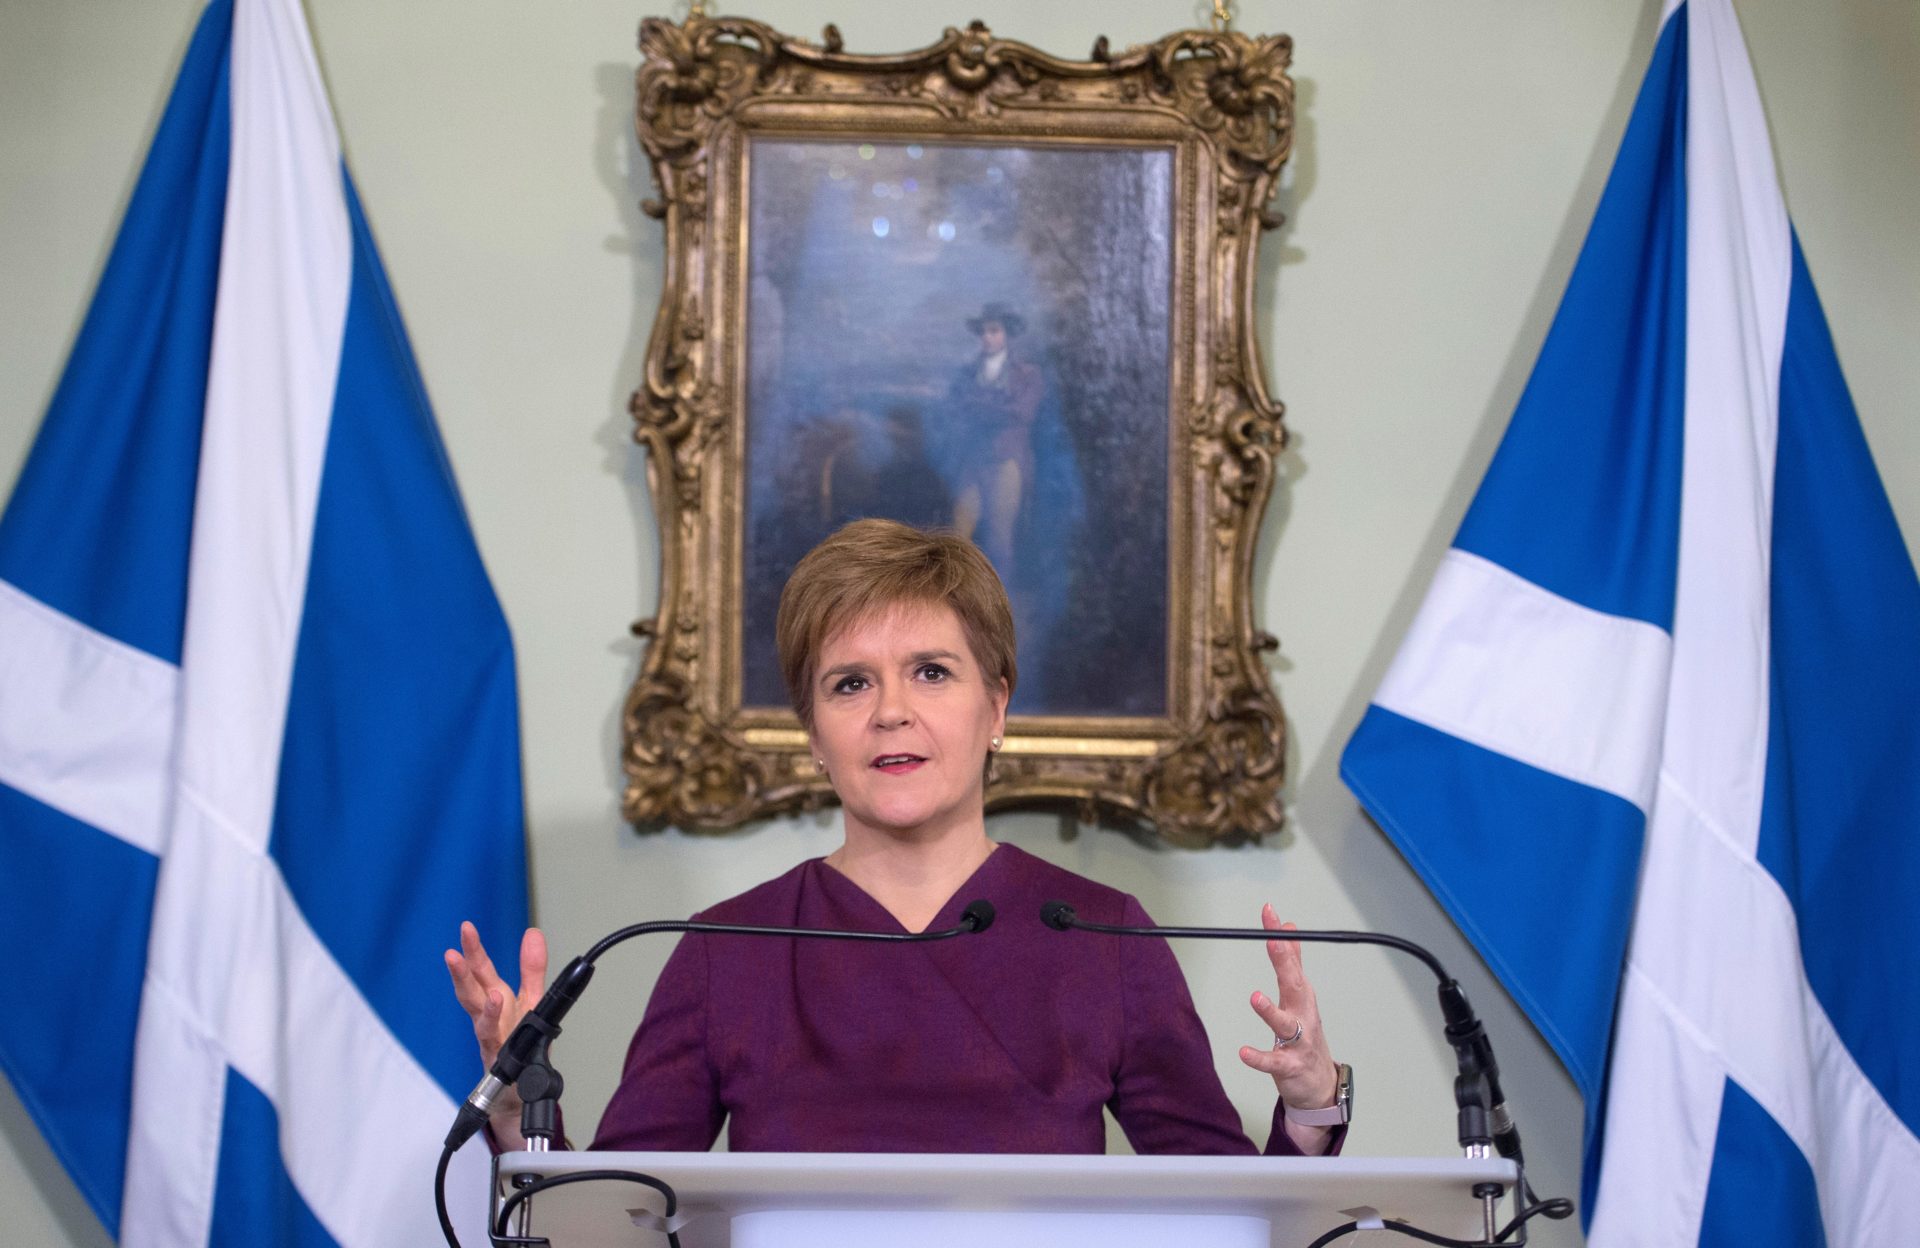 Scottish First Minister Nicola Sturgeon Outlines Next Steps For Scotland's Future